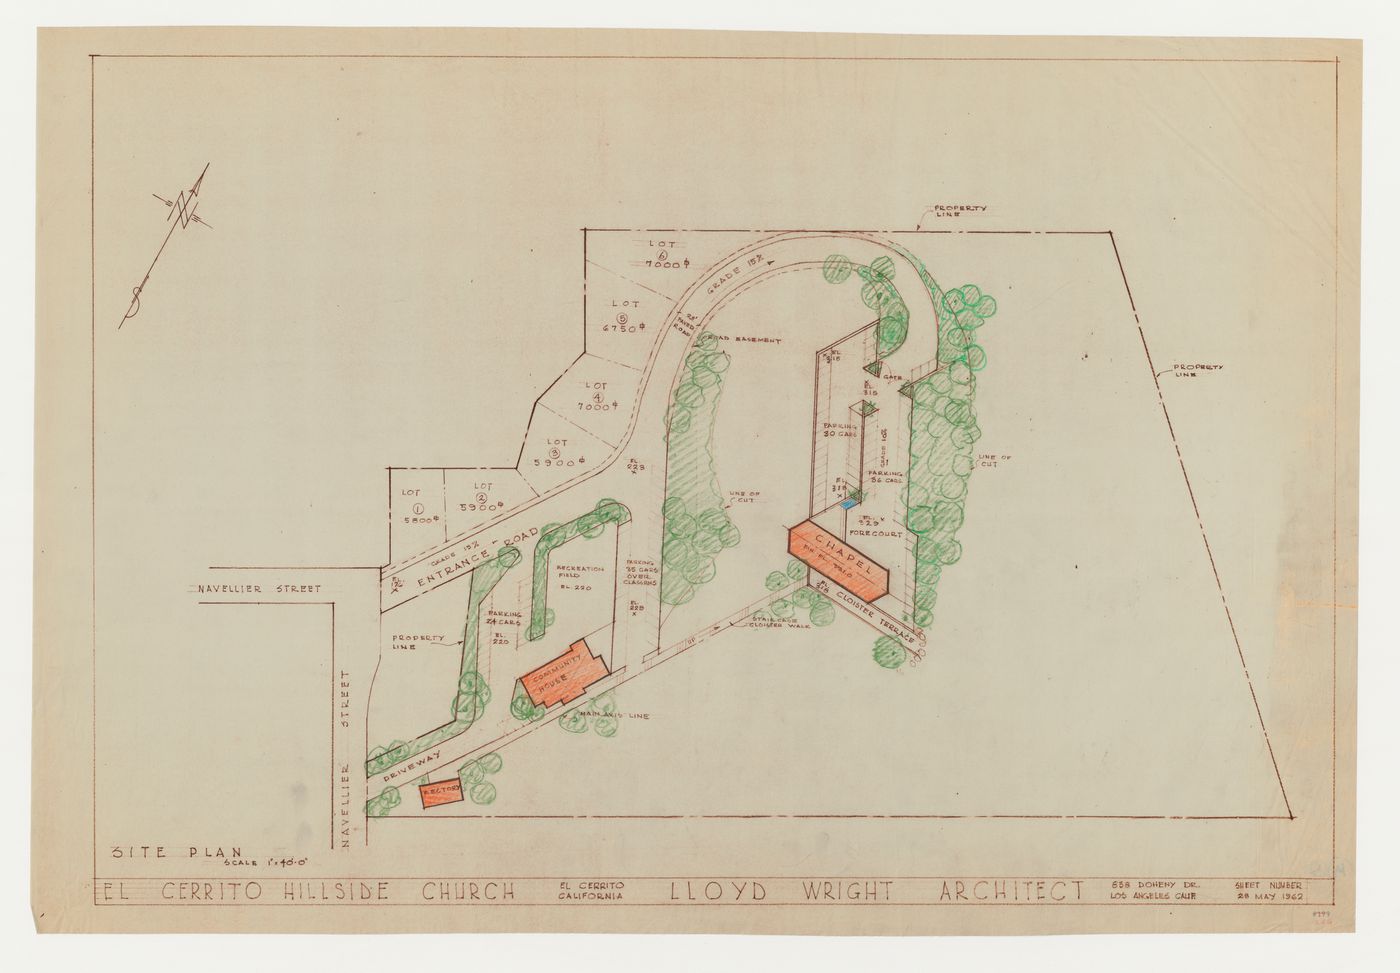 Swedenborg Memorial Chapel, El Cerrito, California: Site plan with sketches for trees